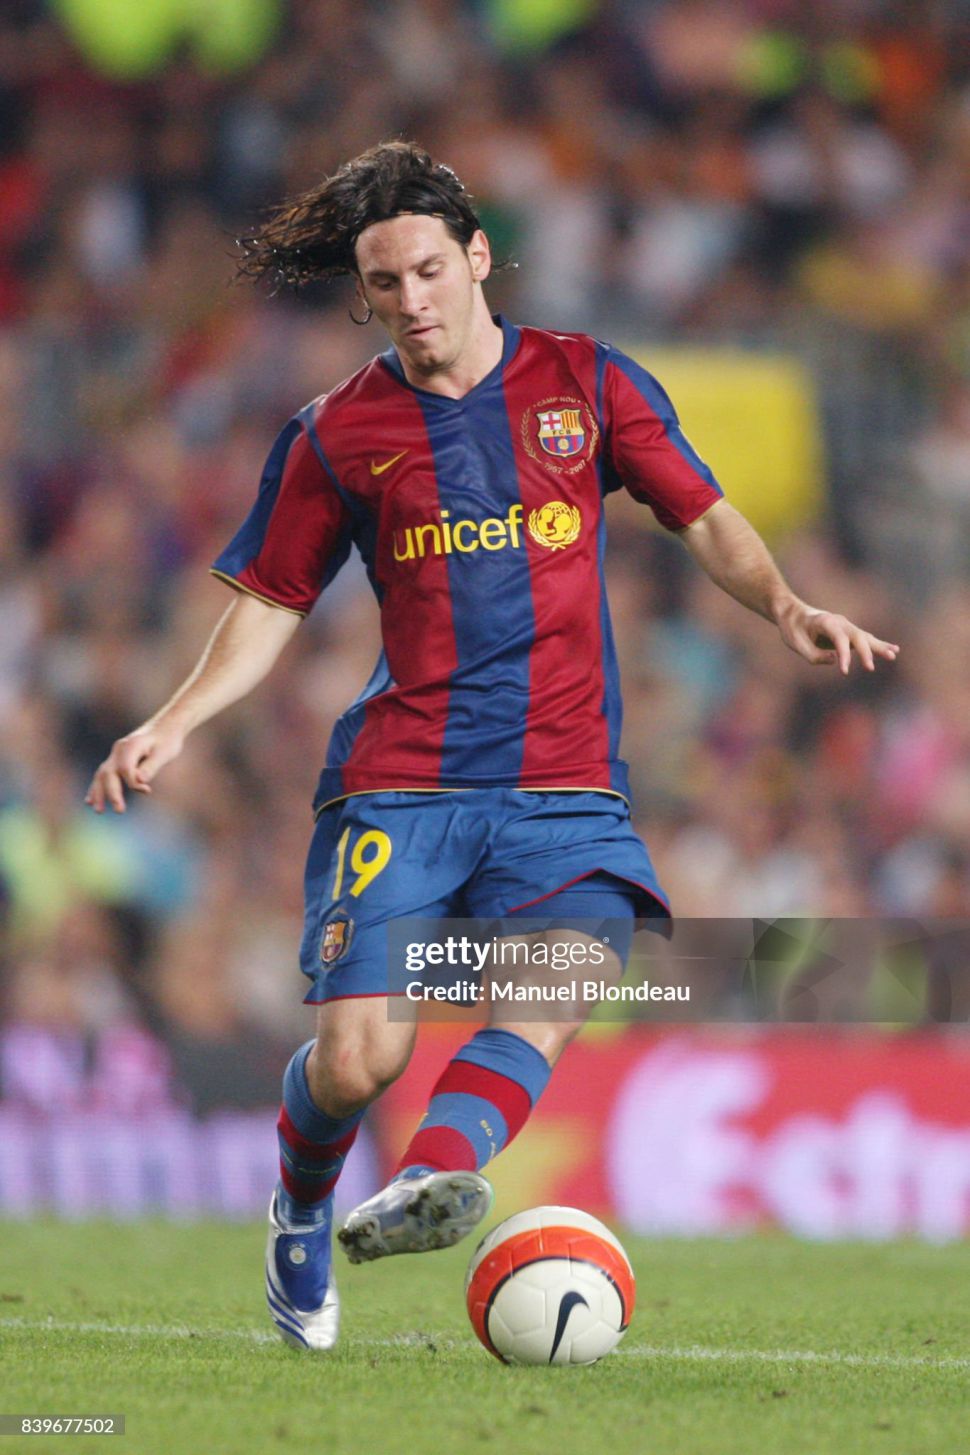 Font Messi 19 Barcelona 2007 2008 nameset home away player official